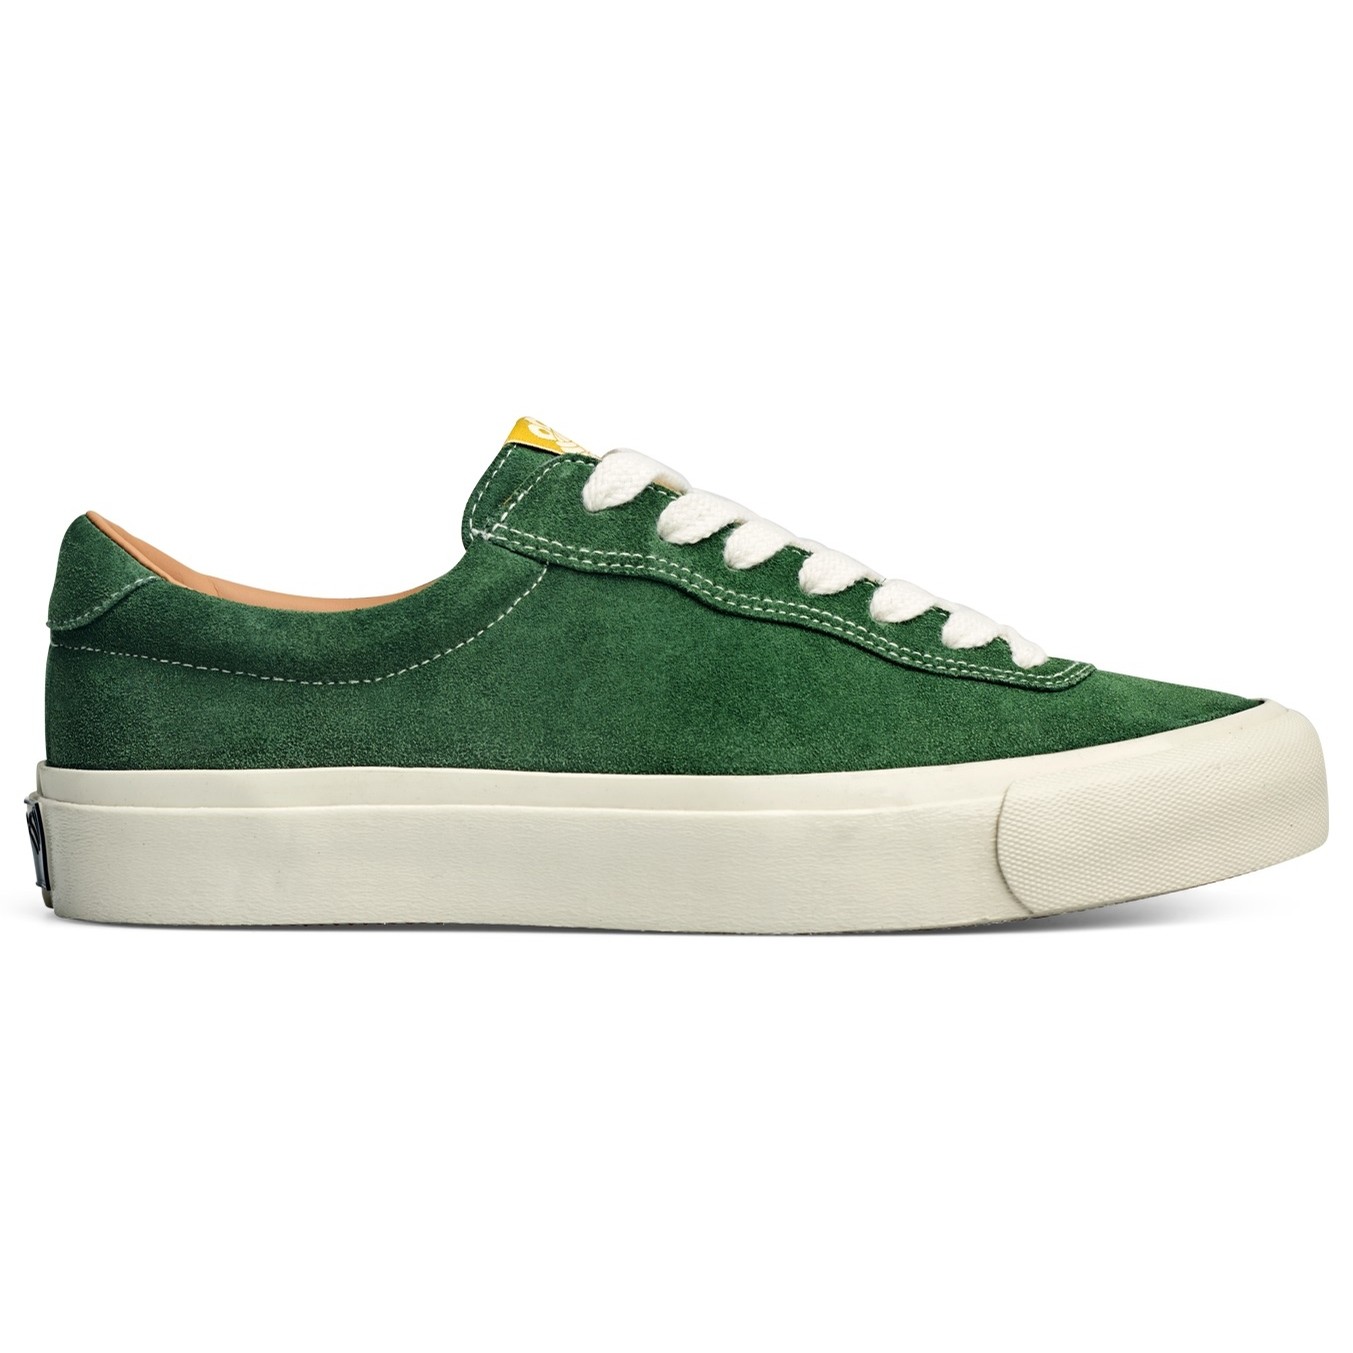 moss green sneakers